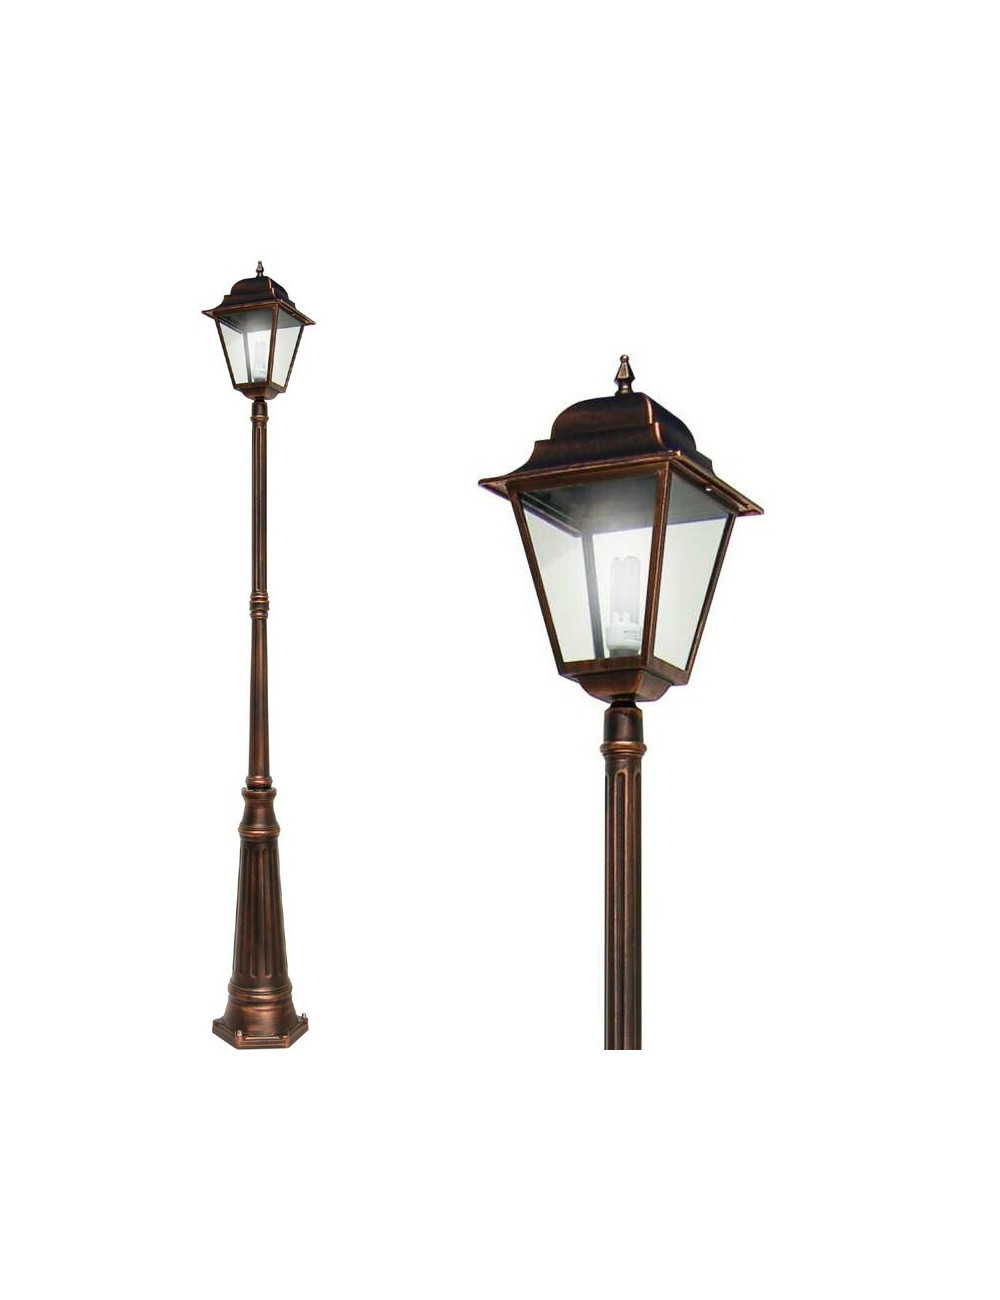 ATHENA GRANDE Farola Square Lantern Pole Outdoor Garden Lighting